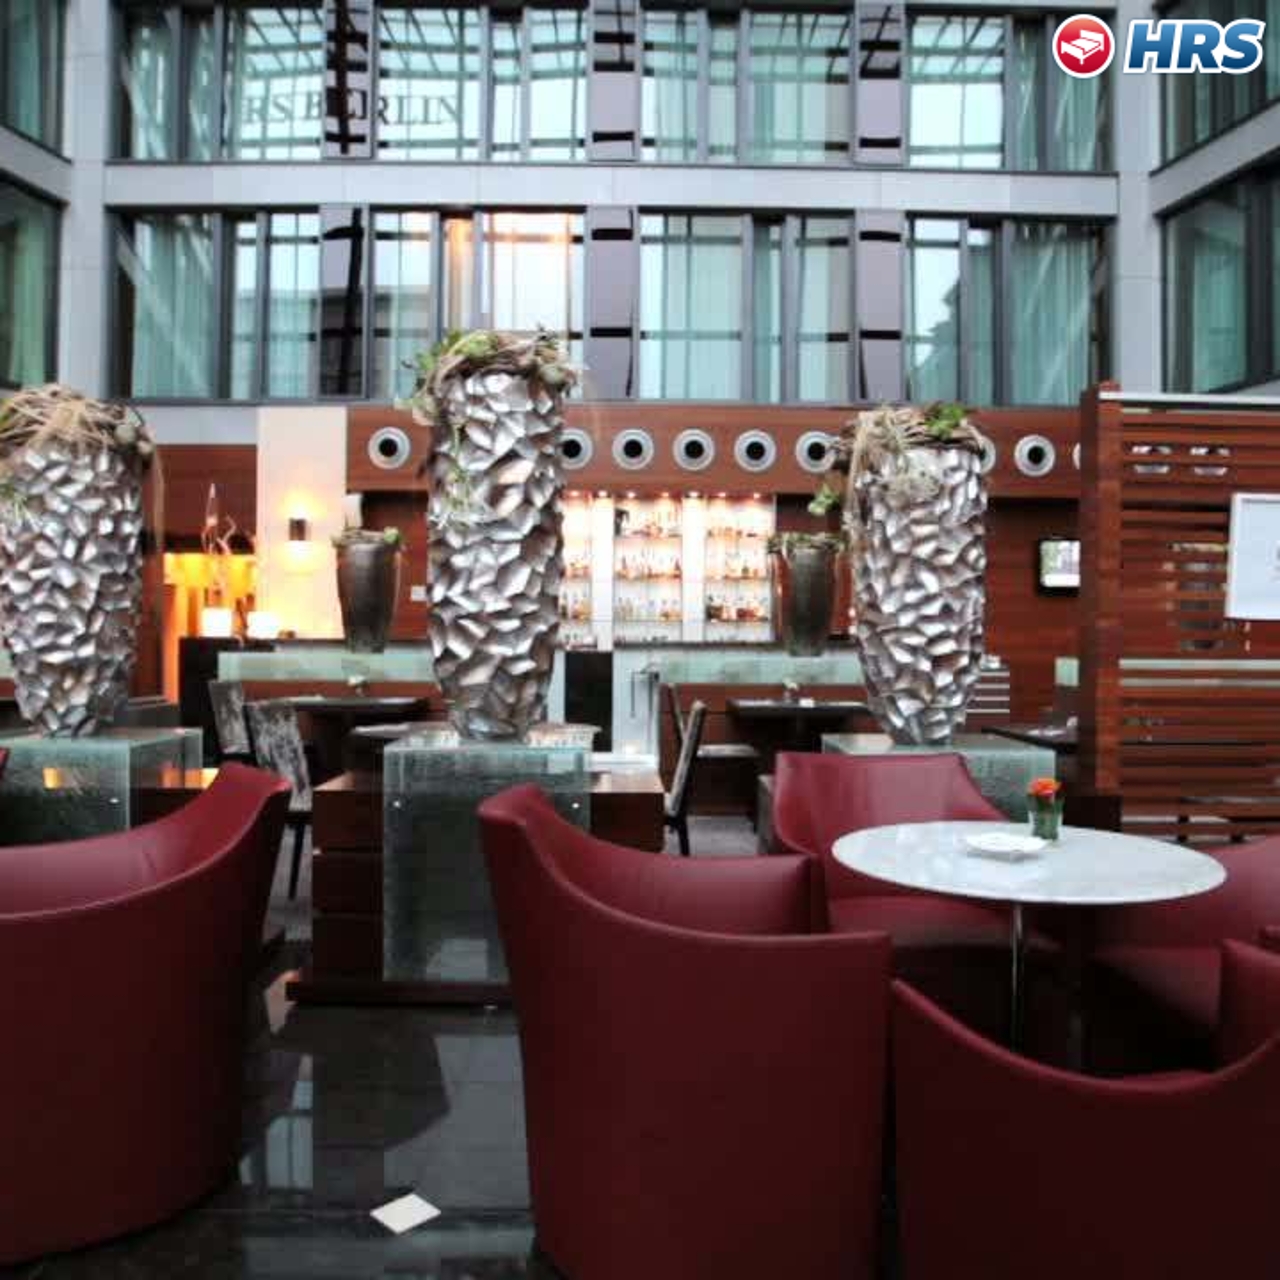 Hotel Eurostars Berlin en HRS con servicios gratuitos